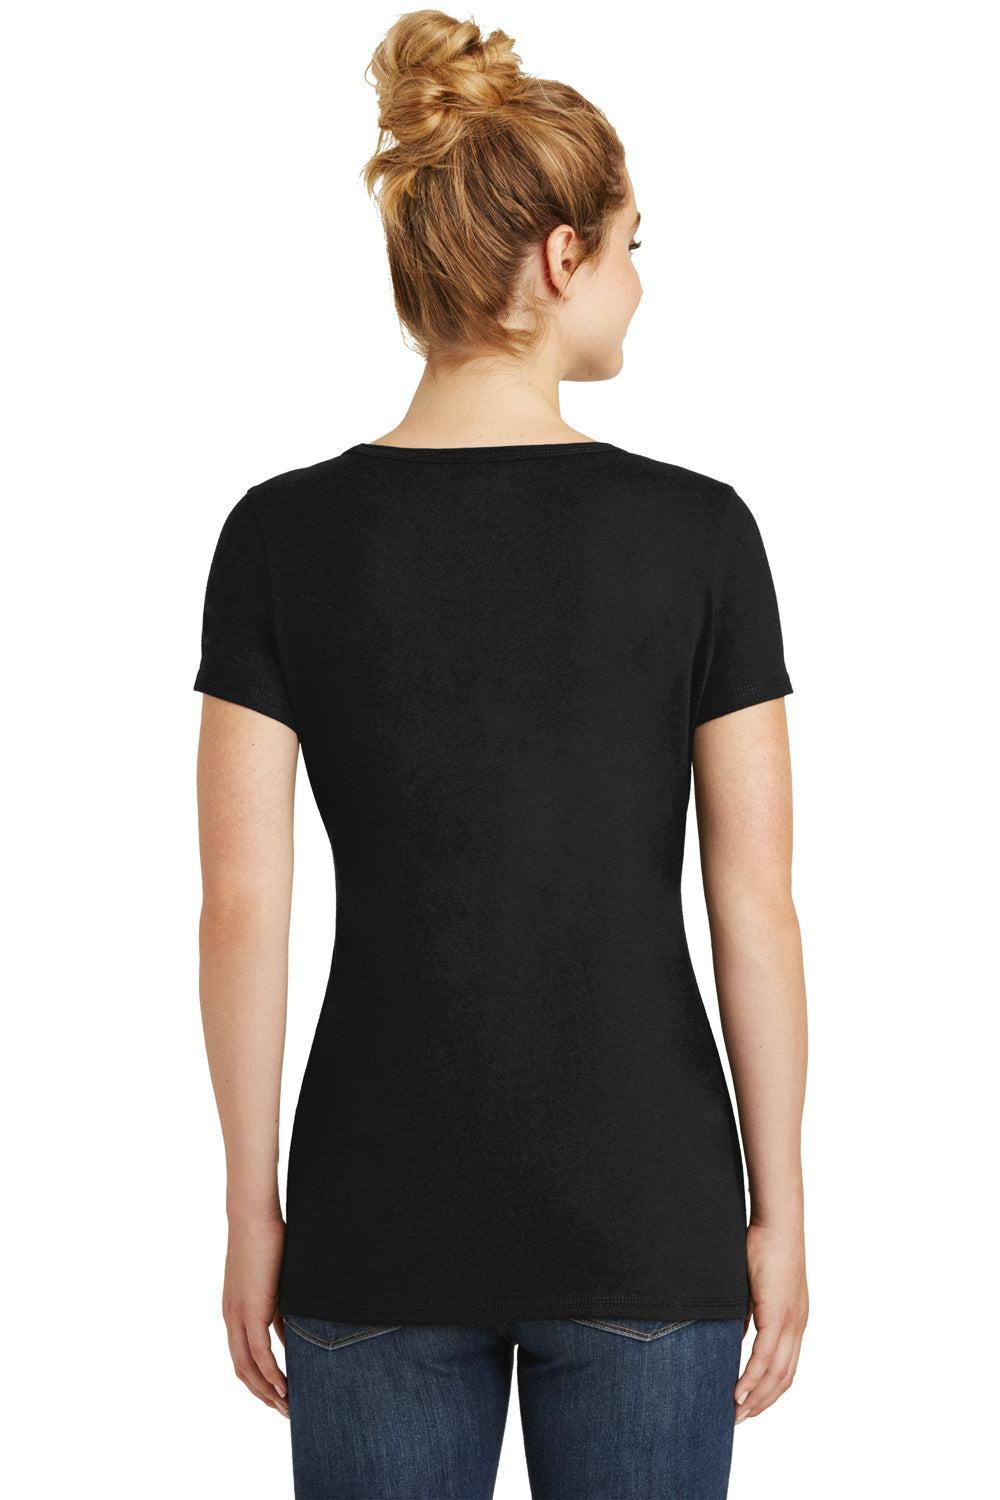 New Era LNEA130 Womens Performance Moisture Wicking Short Sleeve Crewneck T-Shirt Black Back